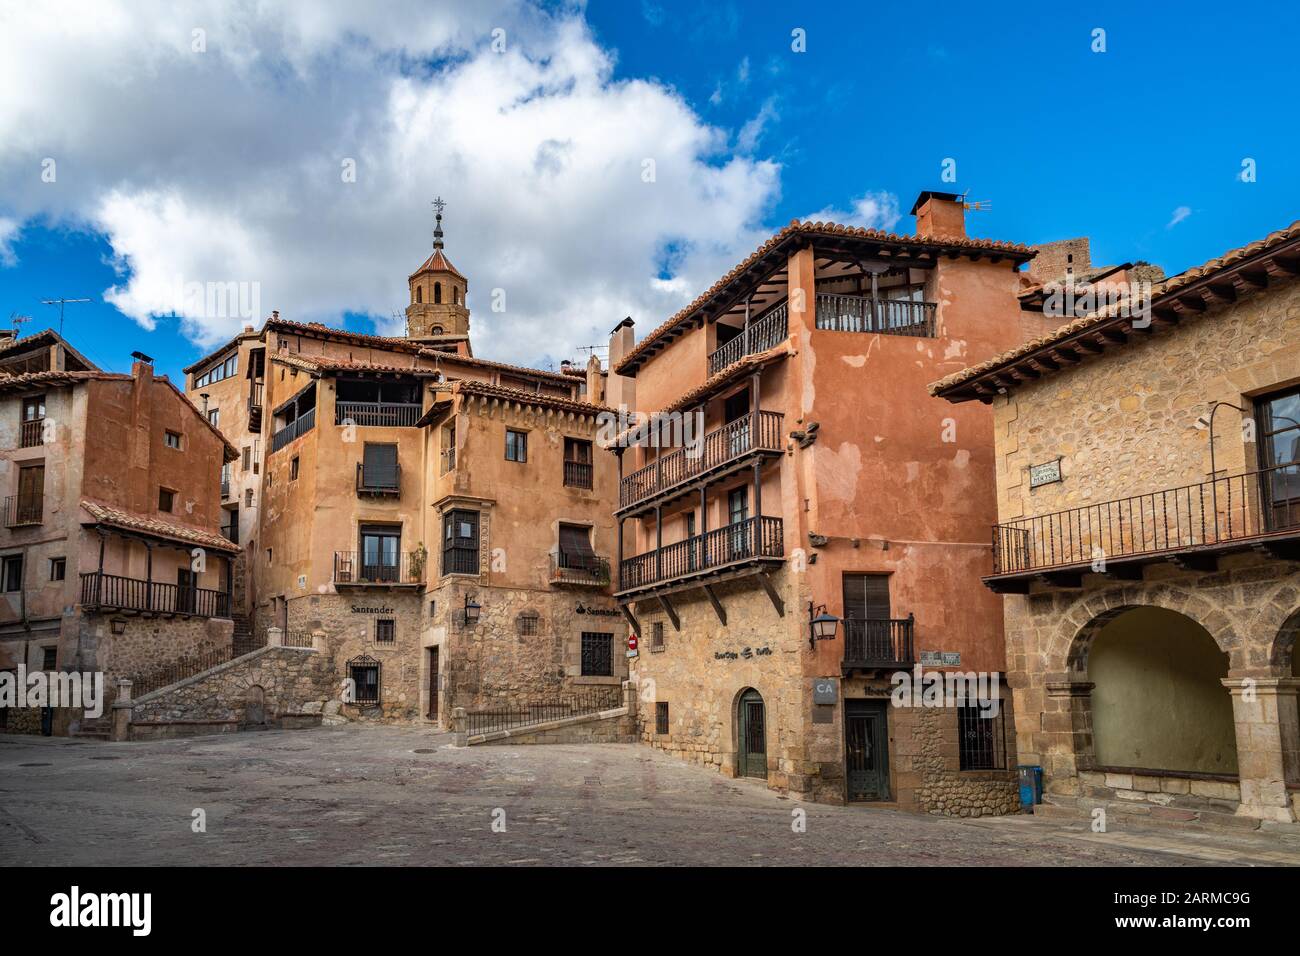 Albarracin, Spain - October 21, 2019: Streets of Albarracin, a picturesque medieval village in Aragon, Spain Stock Photo